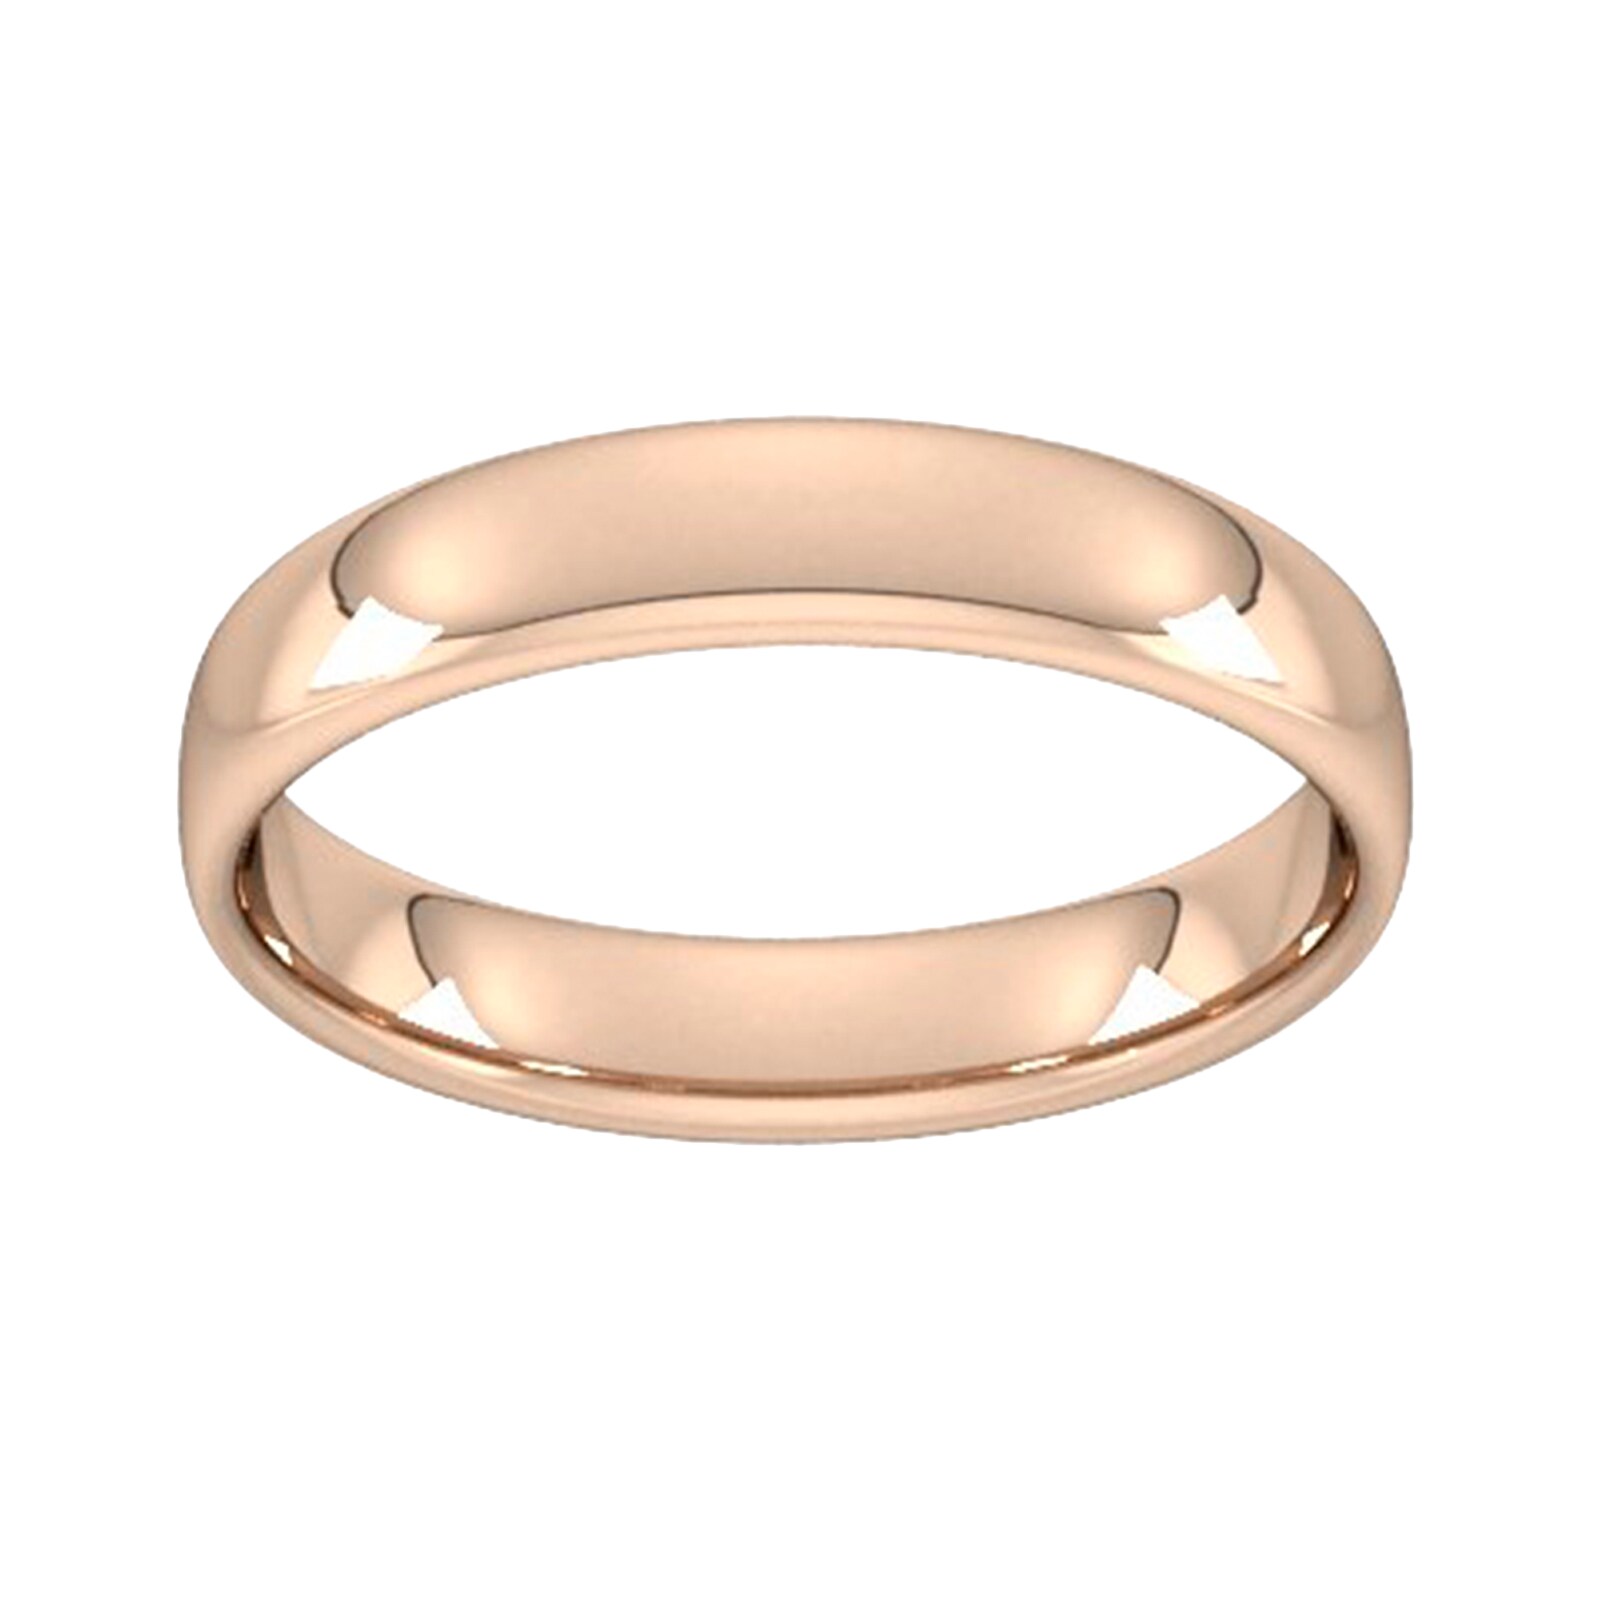 4mm Slight Court Standard Wedding Ring In 9 Carat Rose Gold - Ring Size H